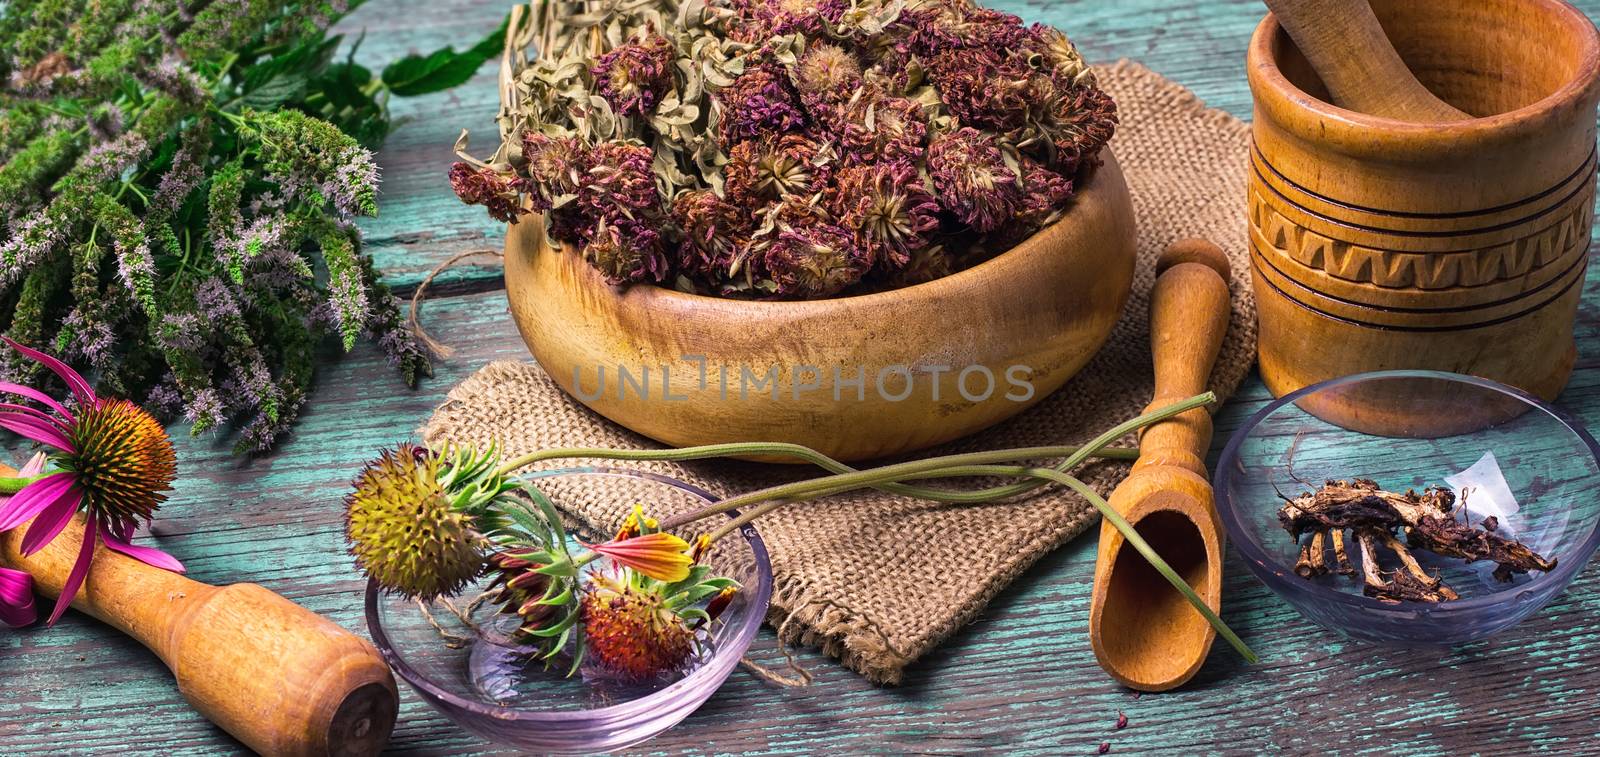 Harvest of medicinal plants by LMykola